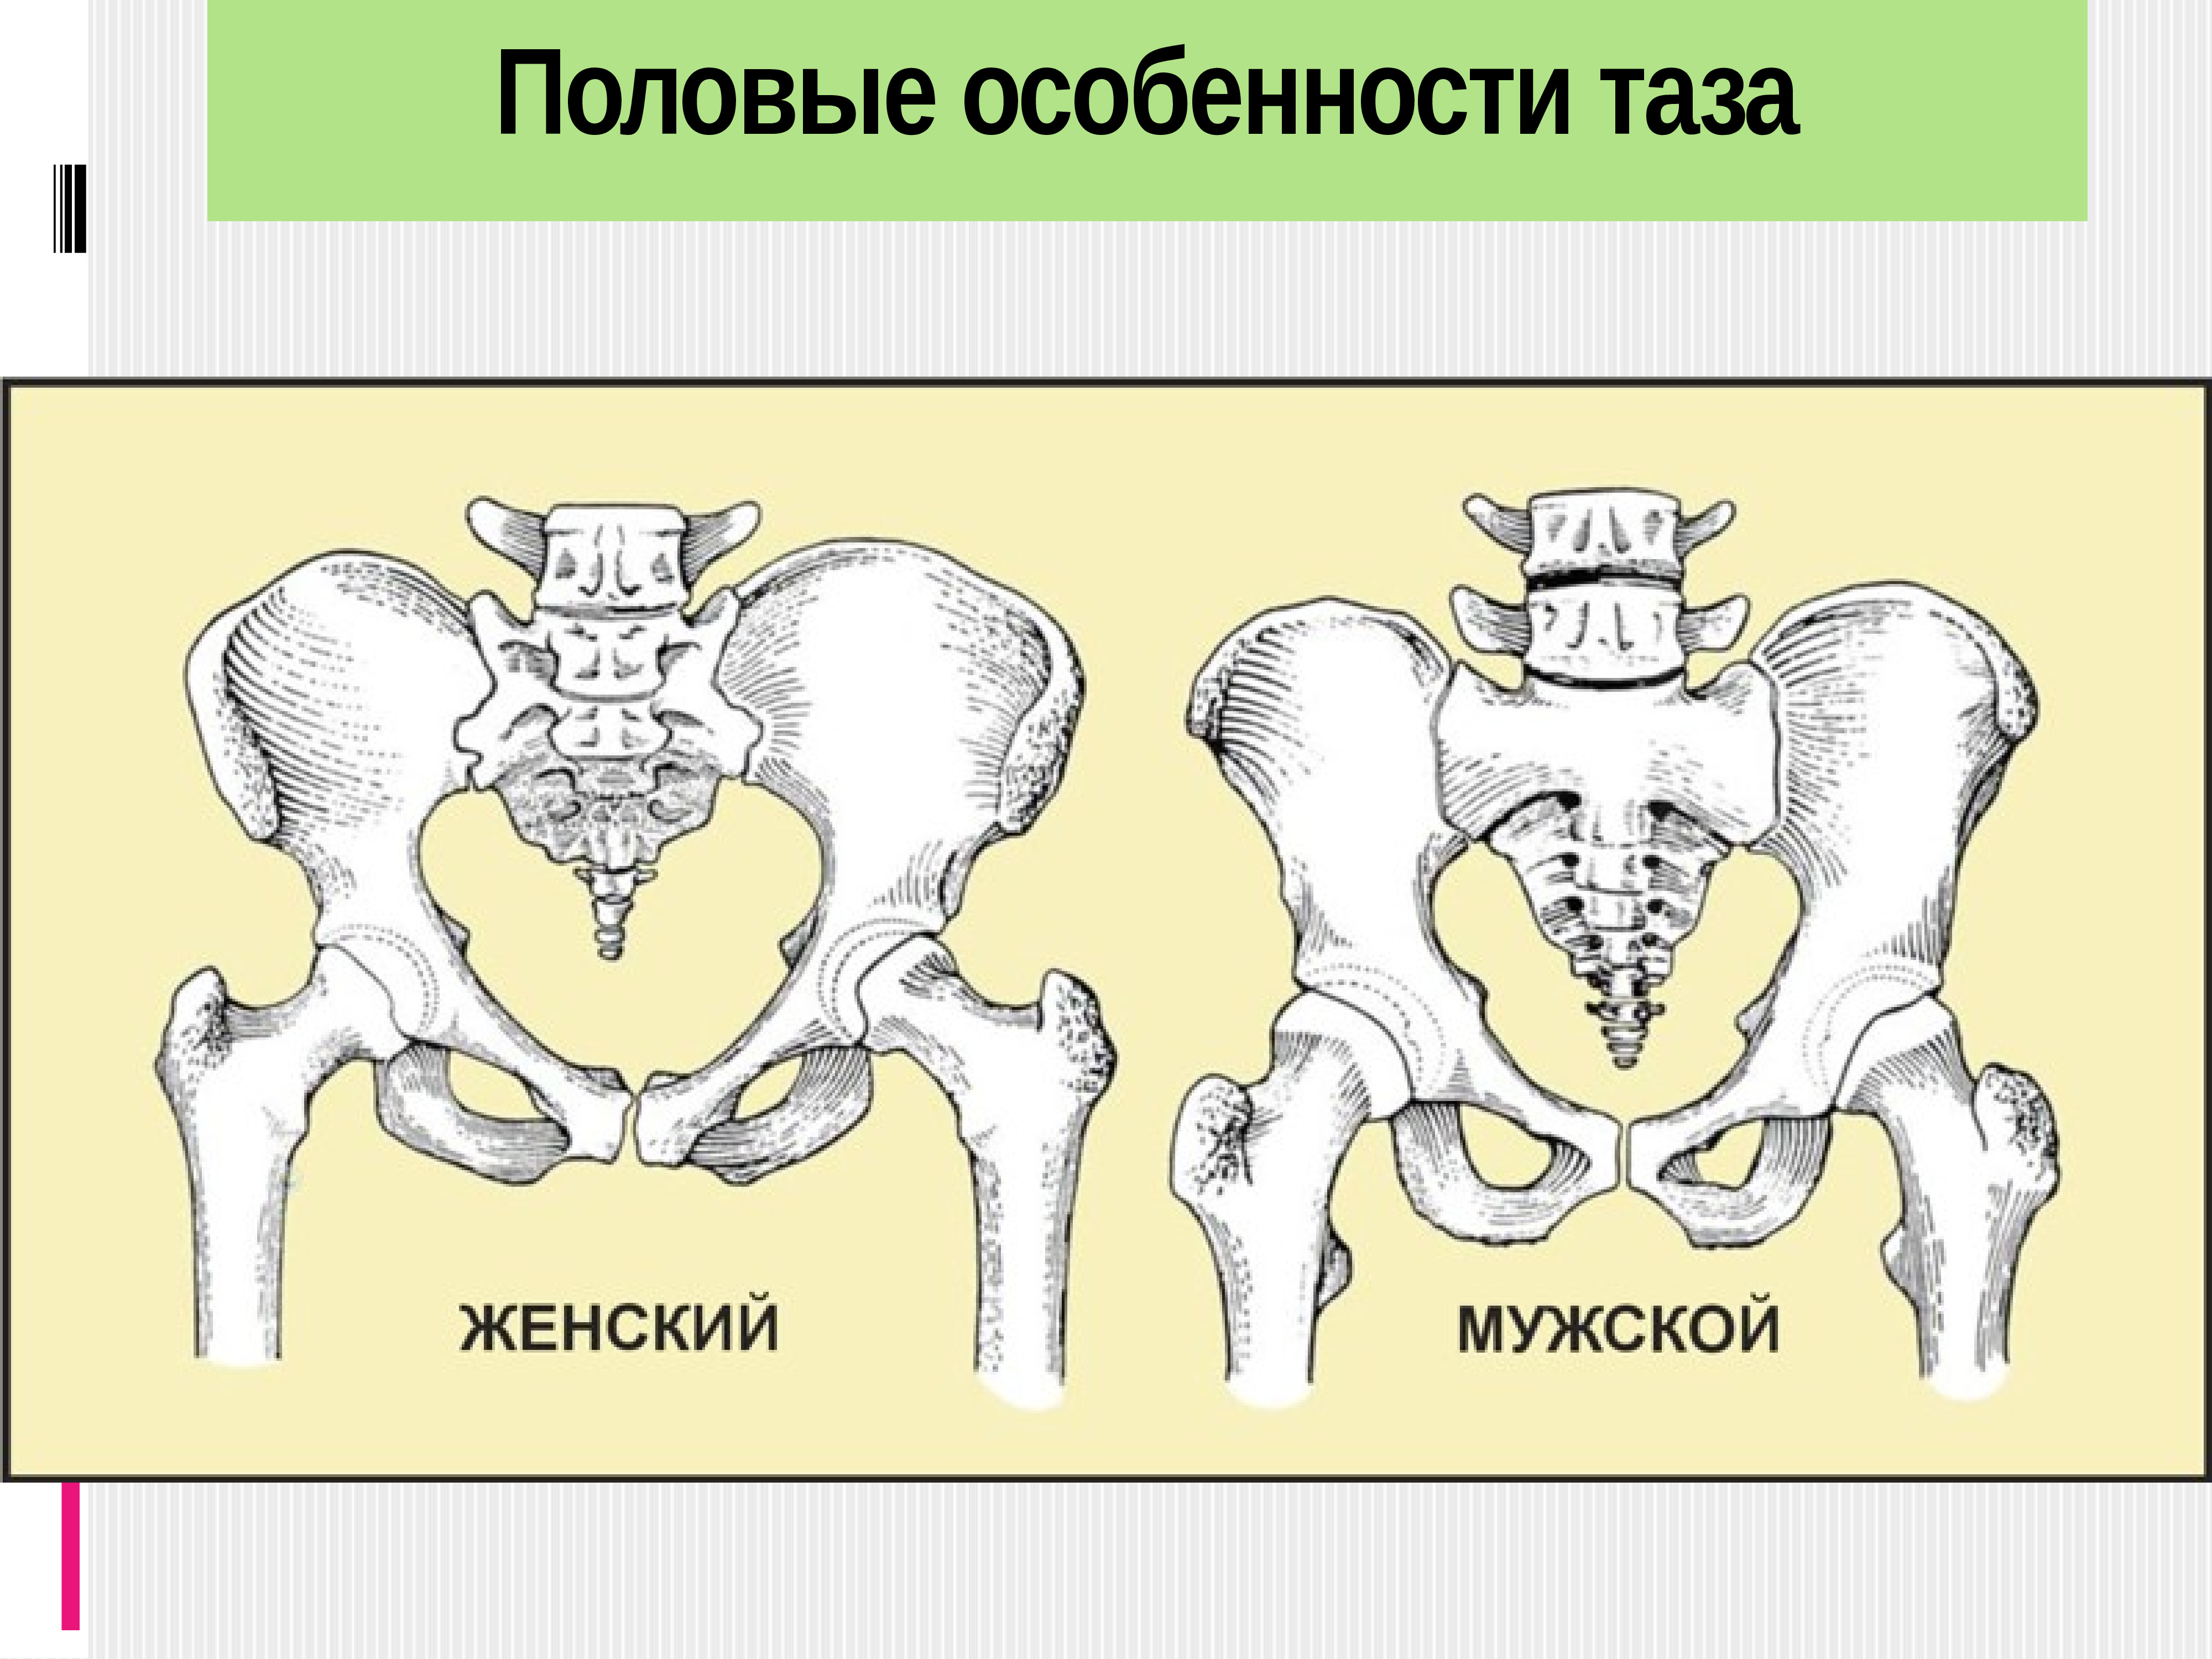 Расширение таза мужчин. Строение таза костей ости. Строение мужского и женского таза. Строение мужского скелета таза. Мужской и женский таз анатомия.